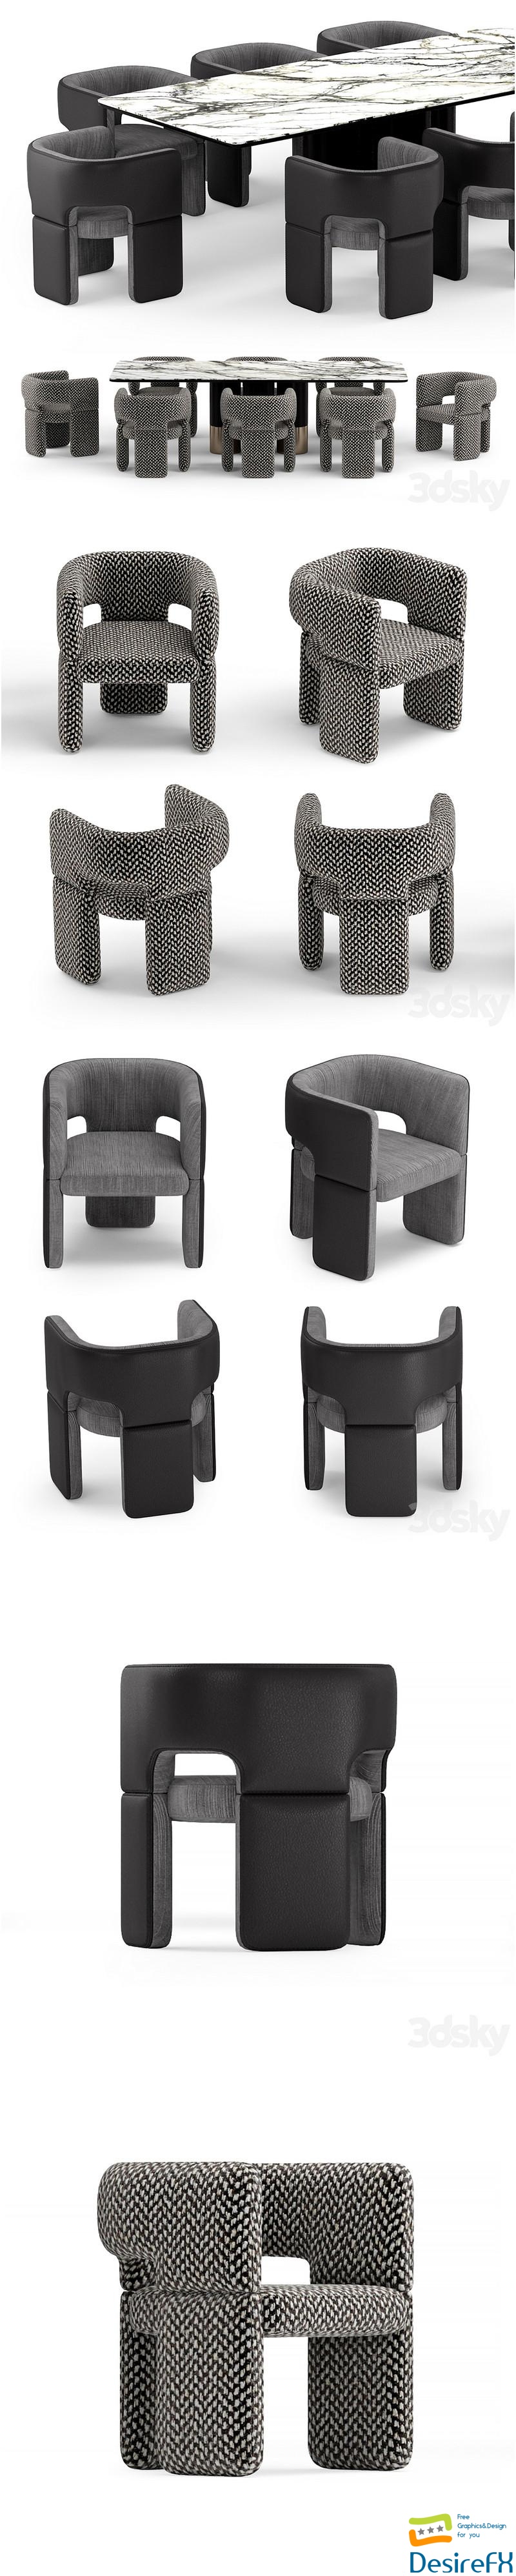 Table and chairs elvemobilya 3D Model